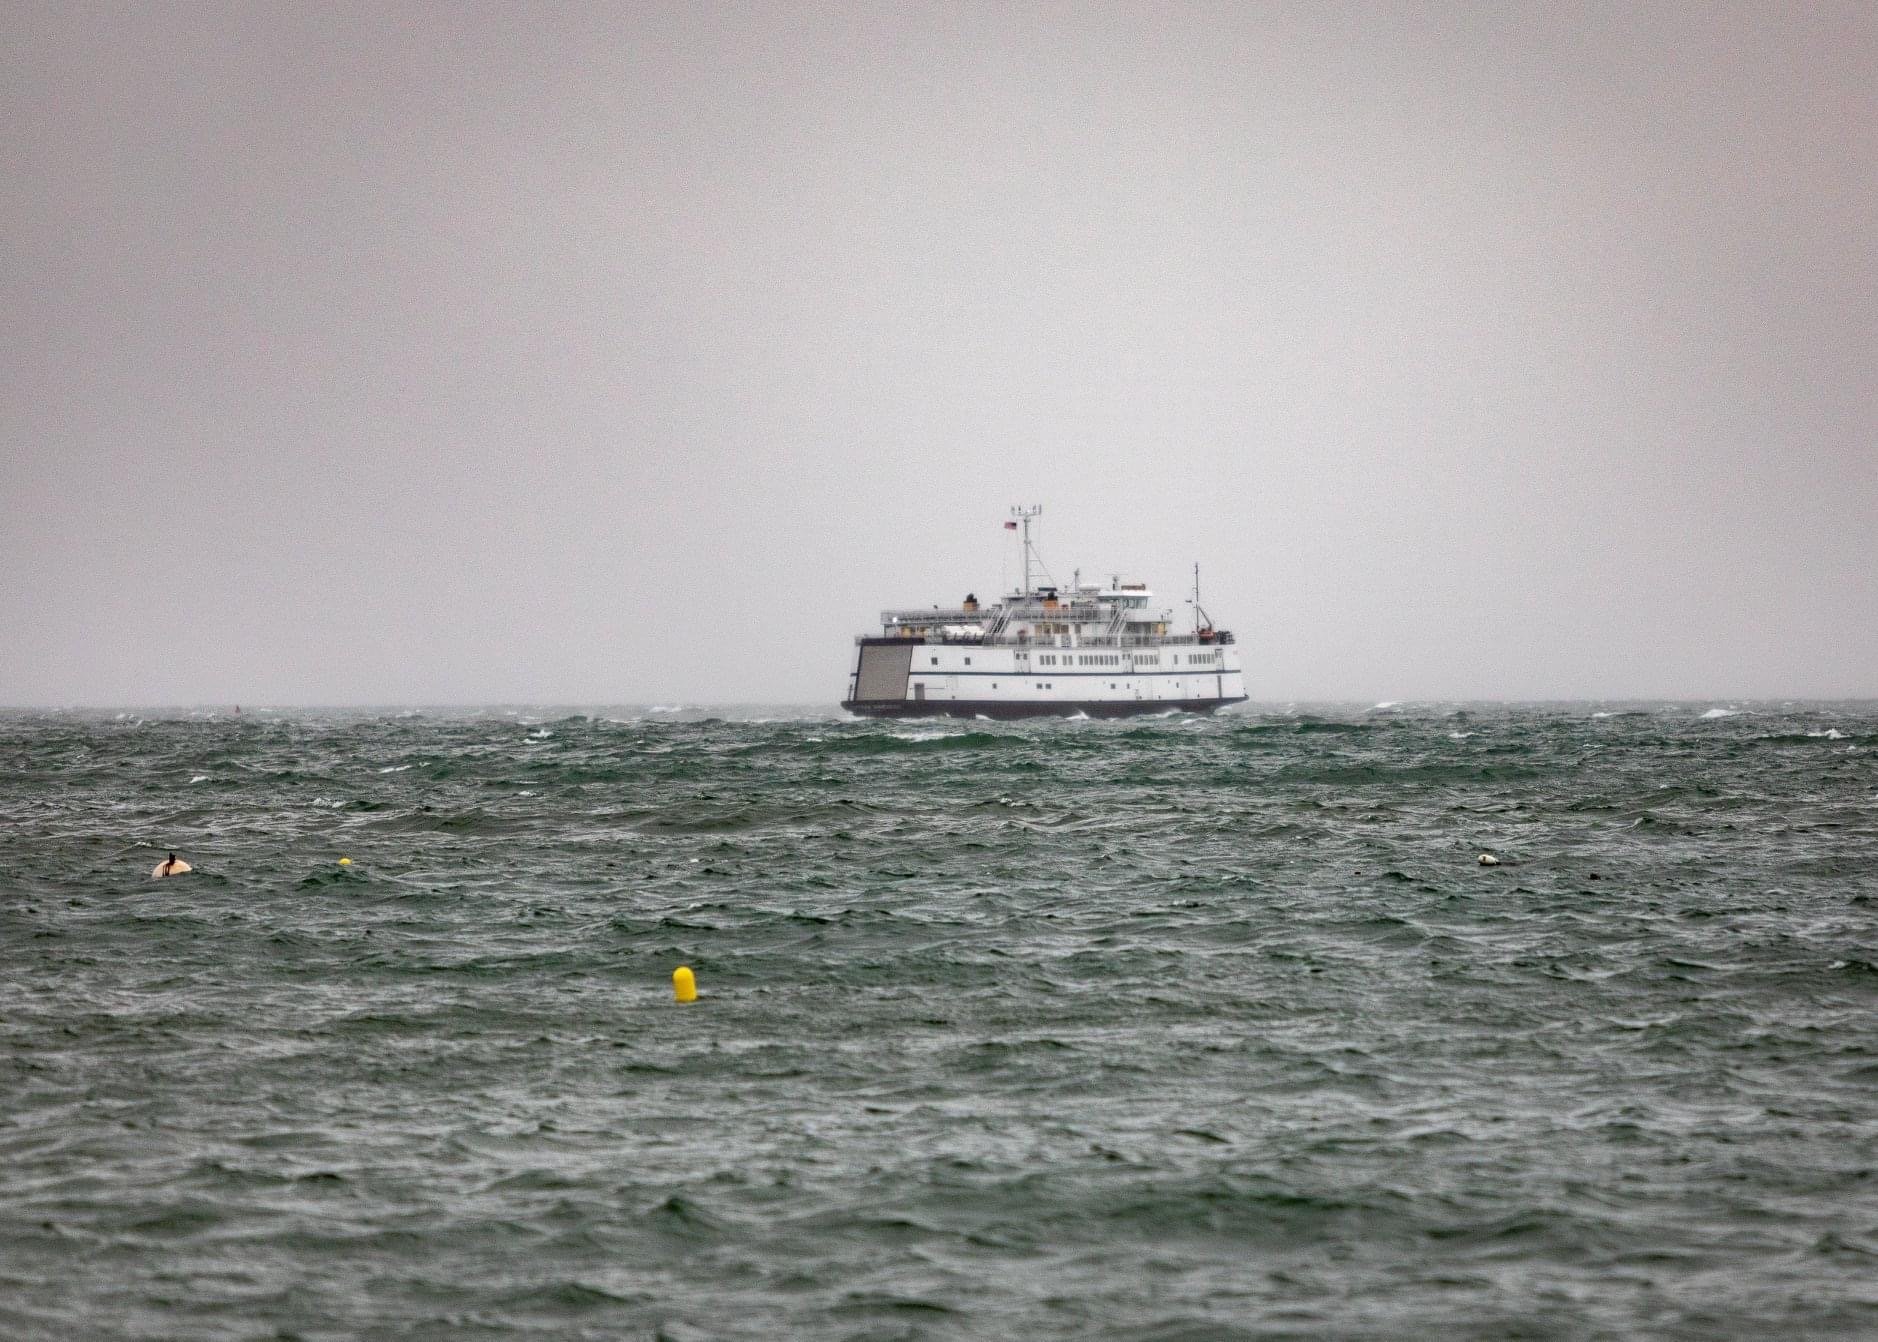 Ferry headed into storm, Martha's Vineyard